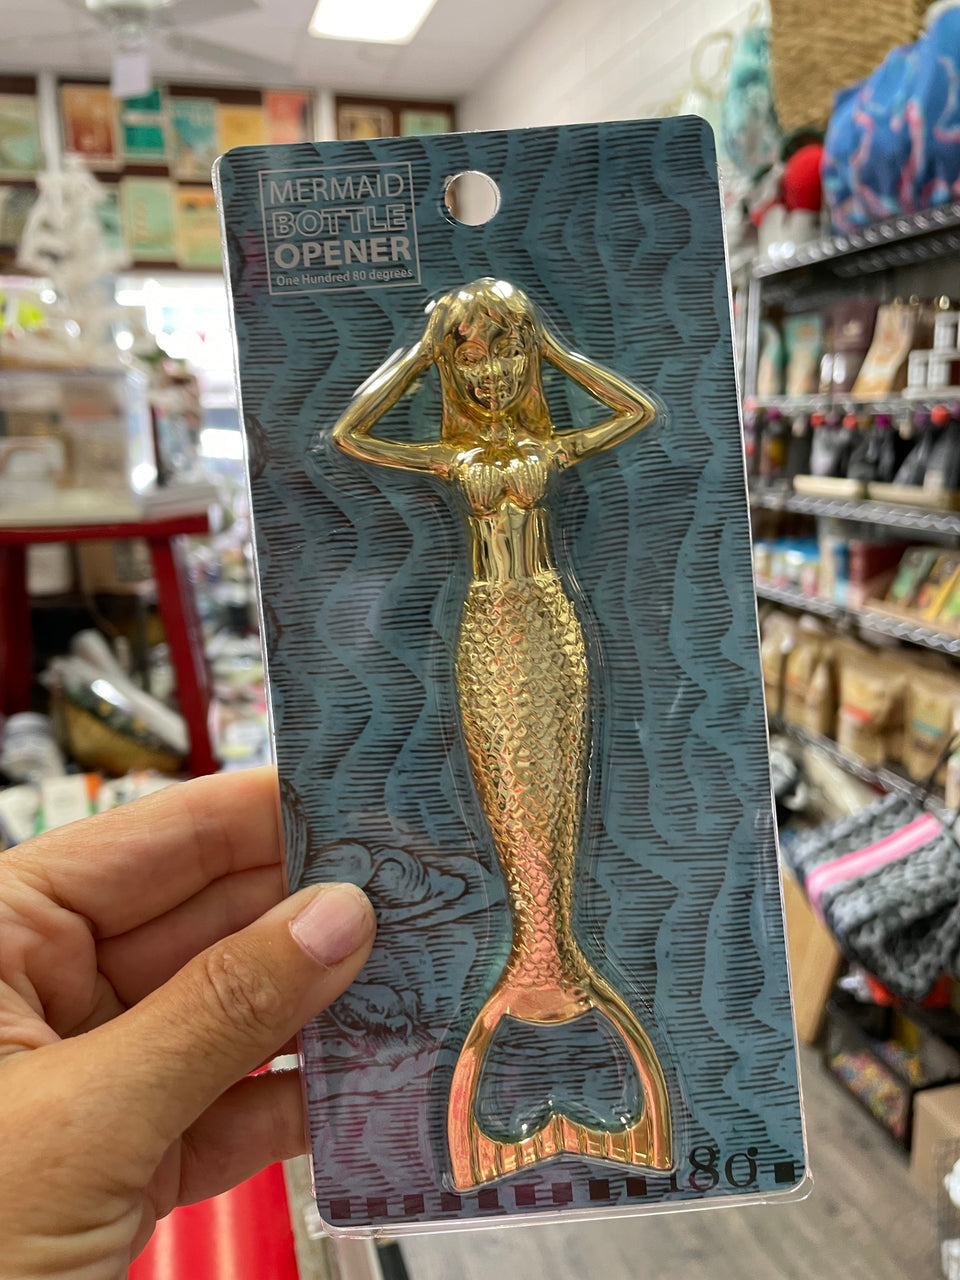 Golden mermaid bottle opener